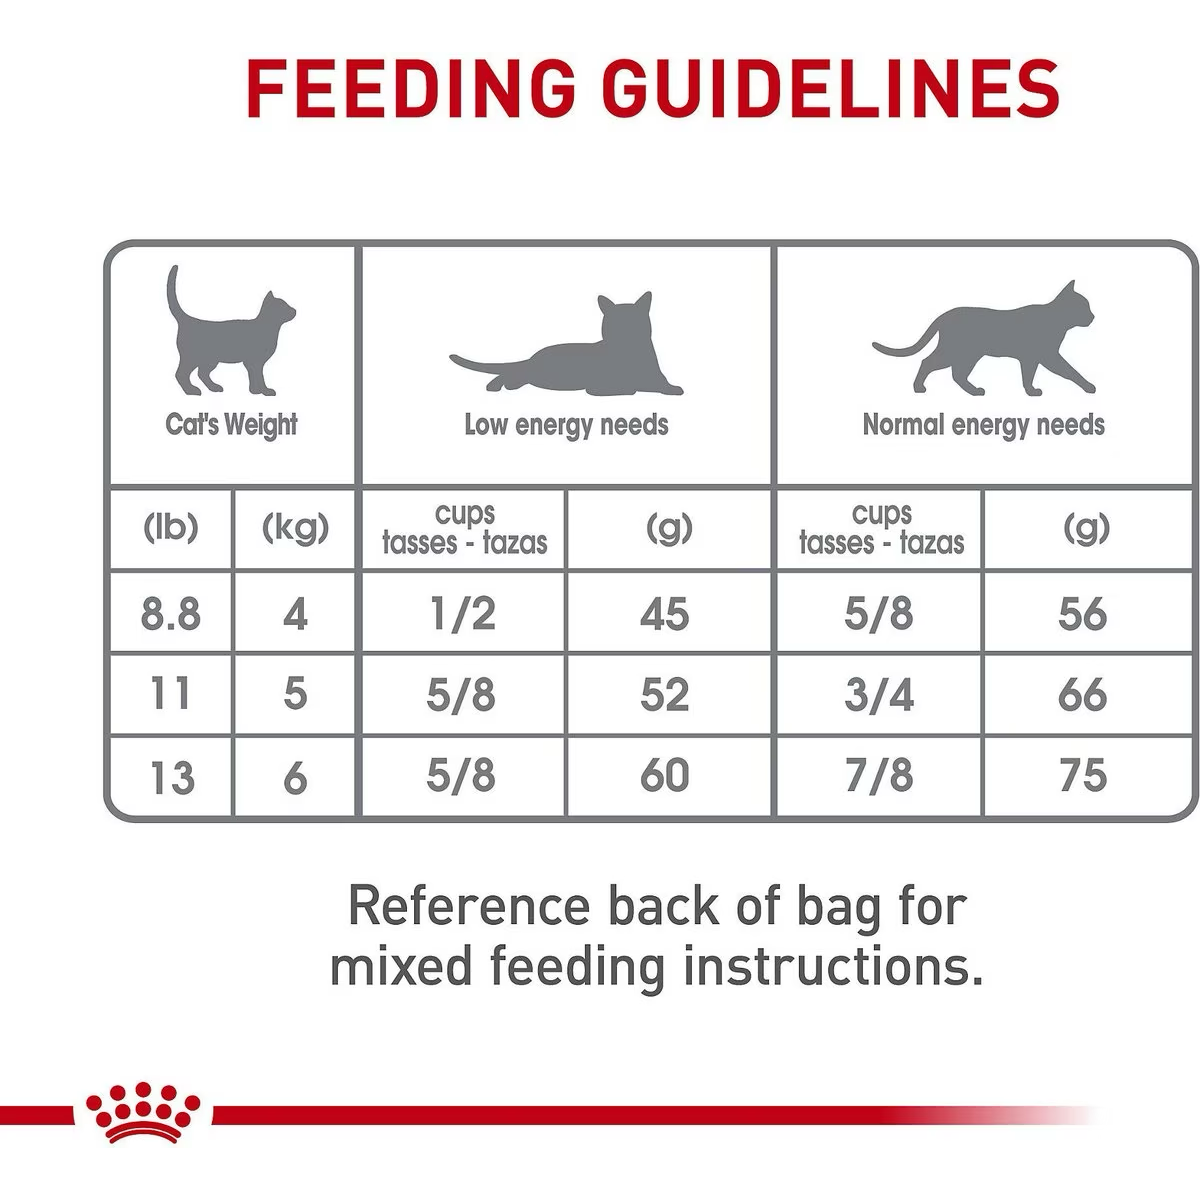 Royal Canin Dental Care Dry Cat Food  Cat Food  | PetMax Canada